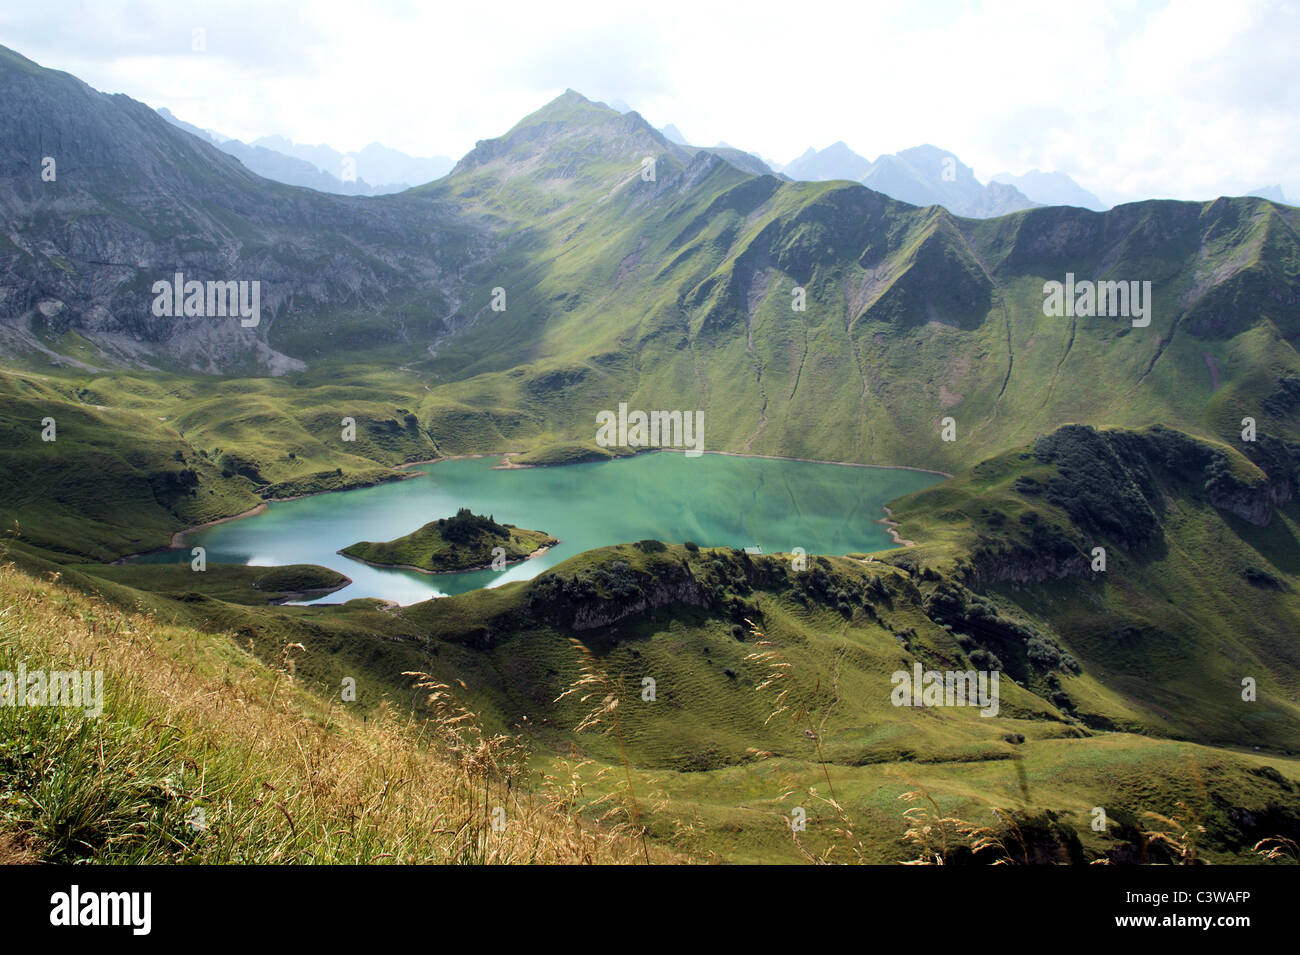 Ein wunderschöner, klarer Bergsee Mitten in den Alpen Banque D'Images